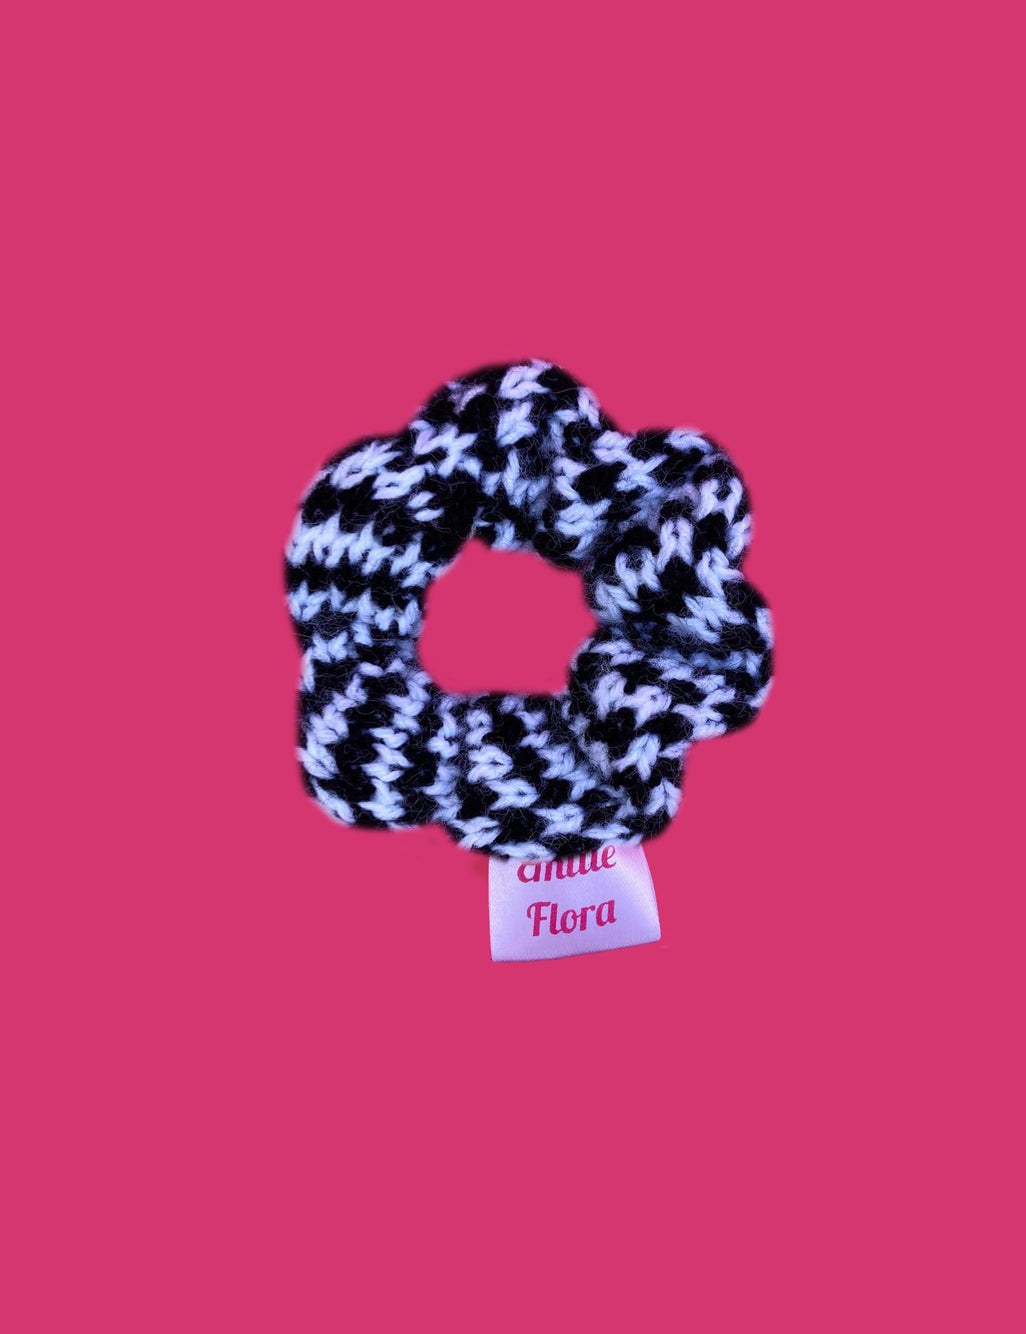 Mini Scrunchie - Zigzag, Black and White - Ready to ship